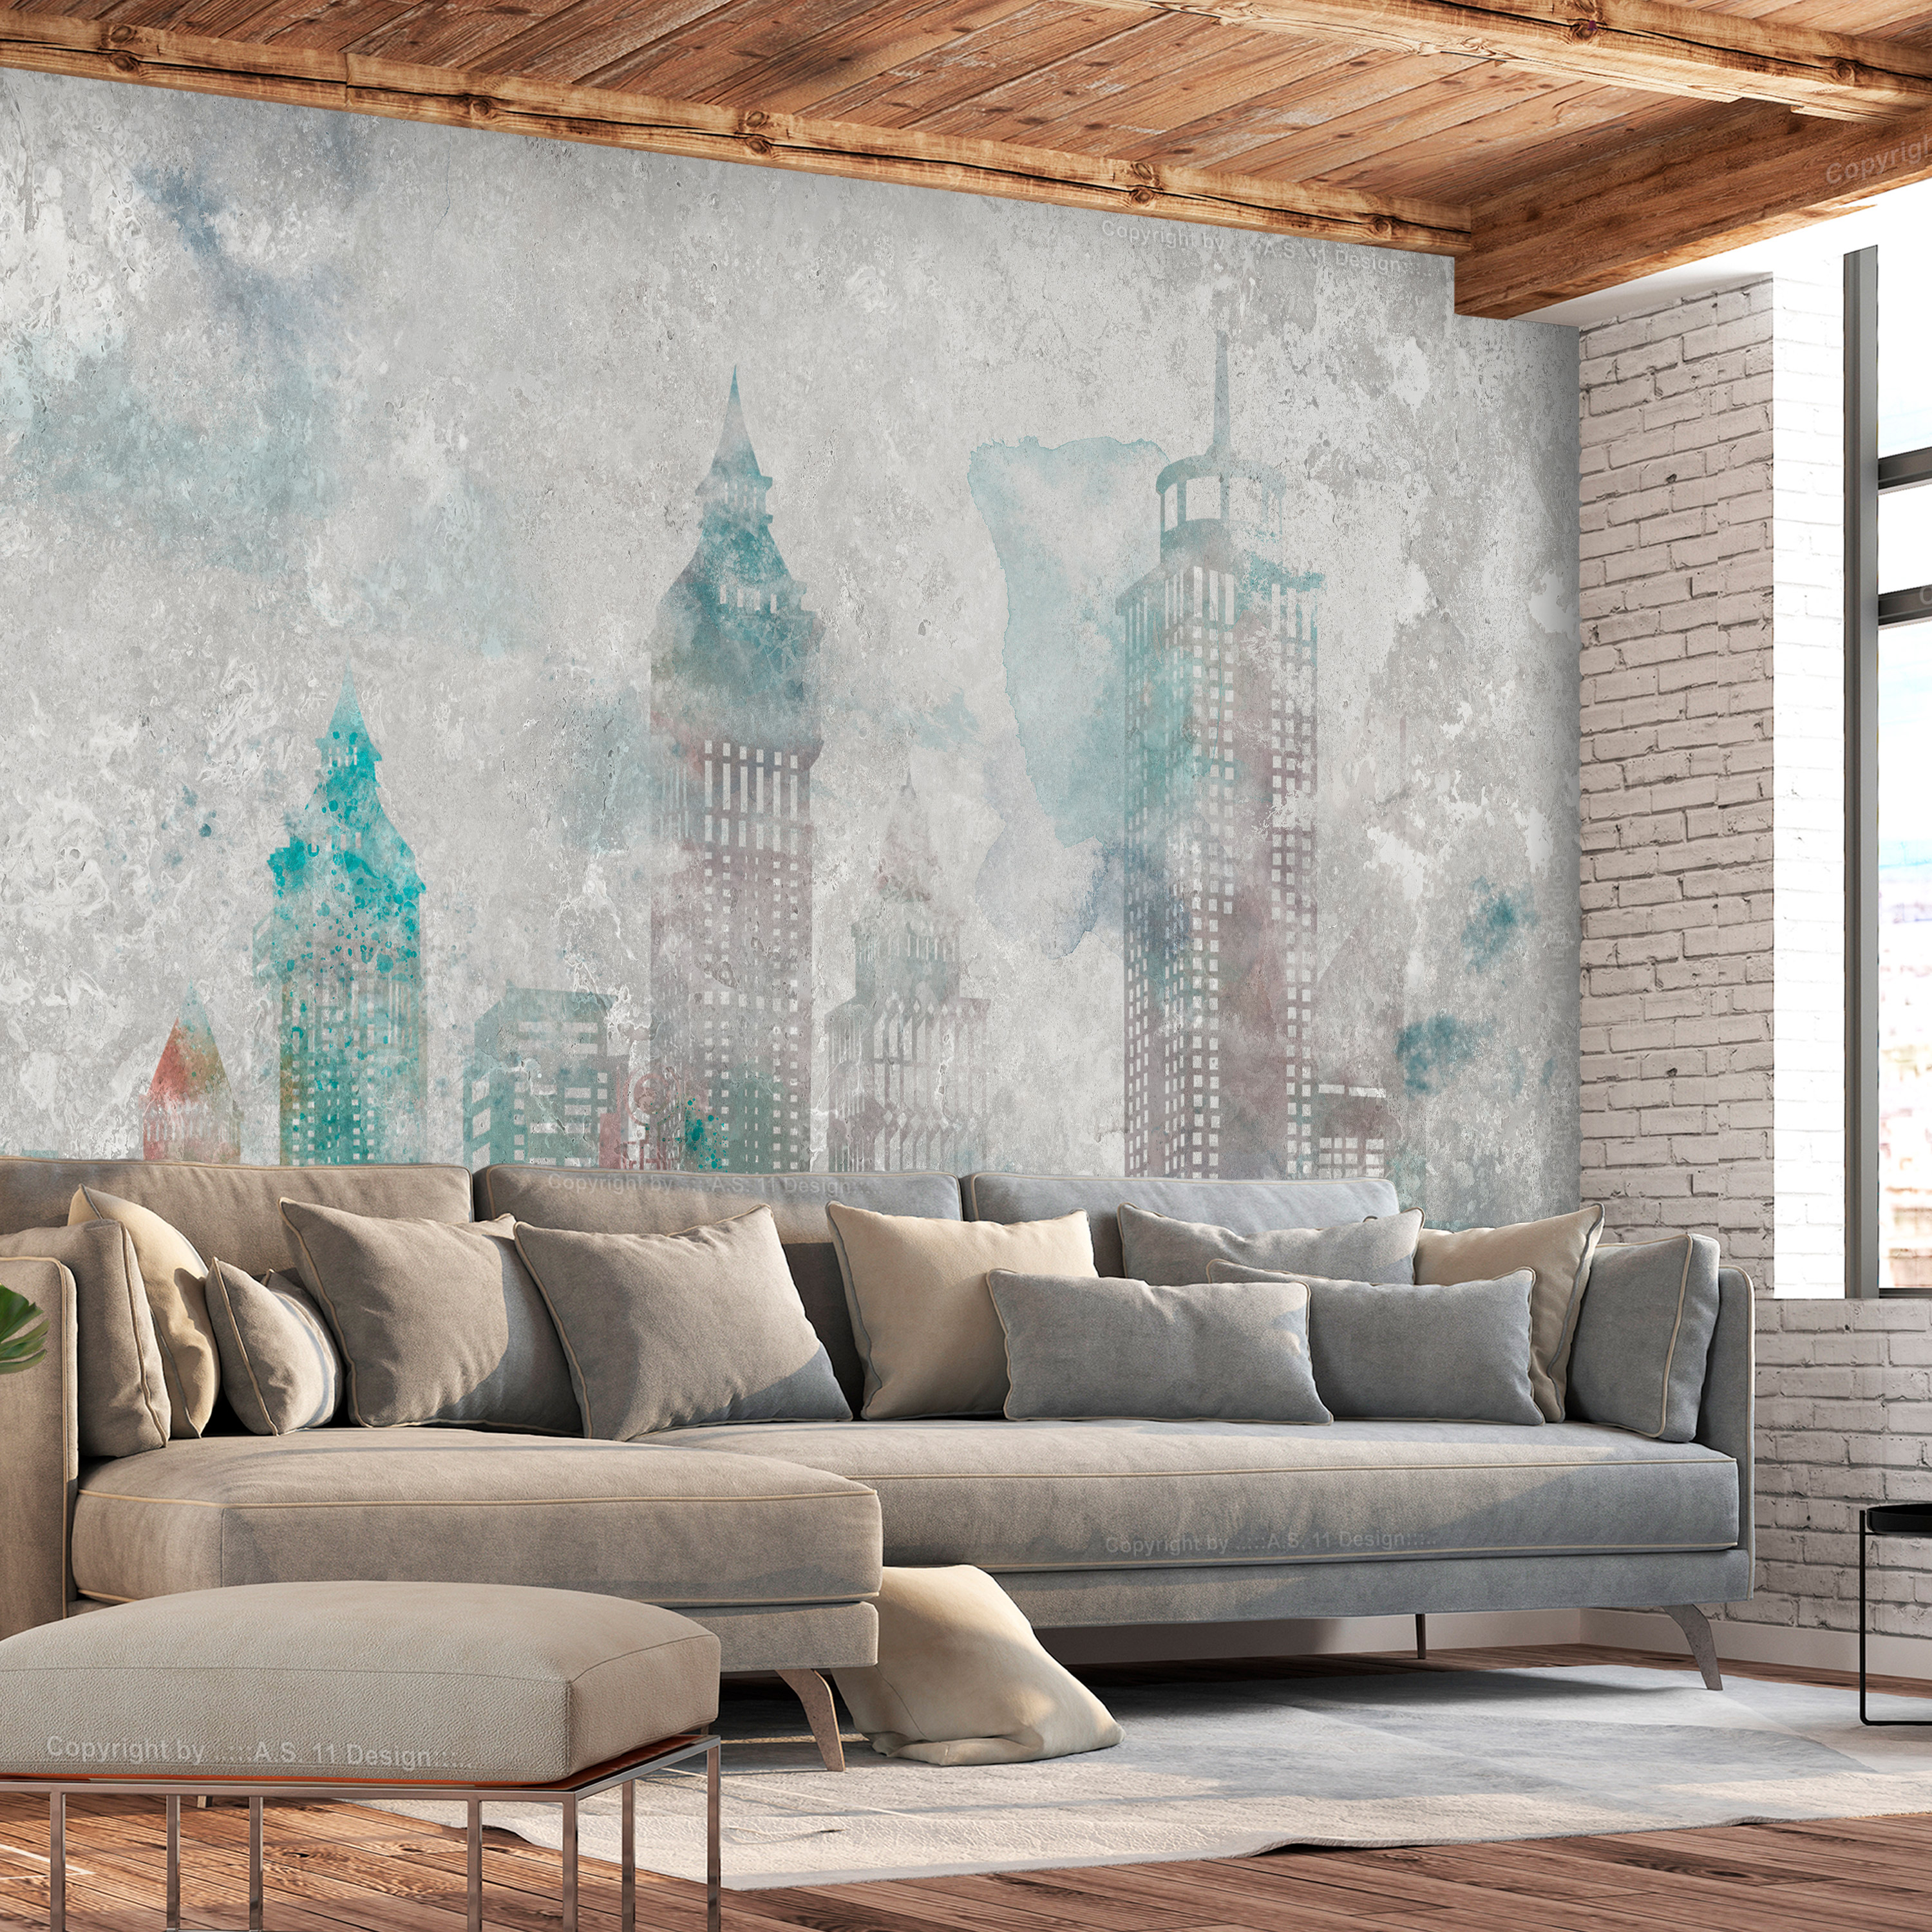 Self-adhesive Wallpaper - Watercolour City - 196x140